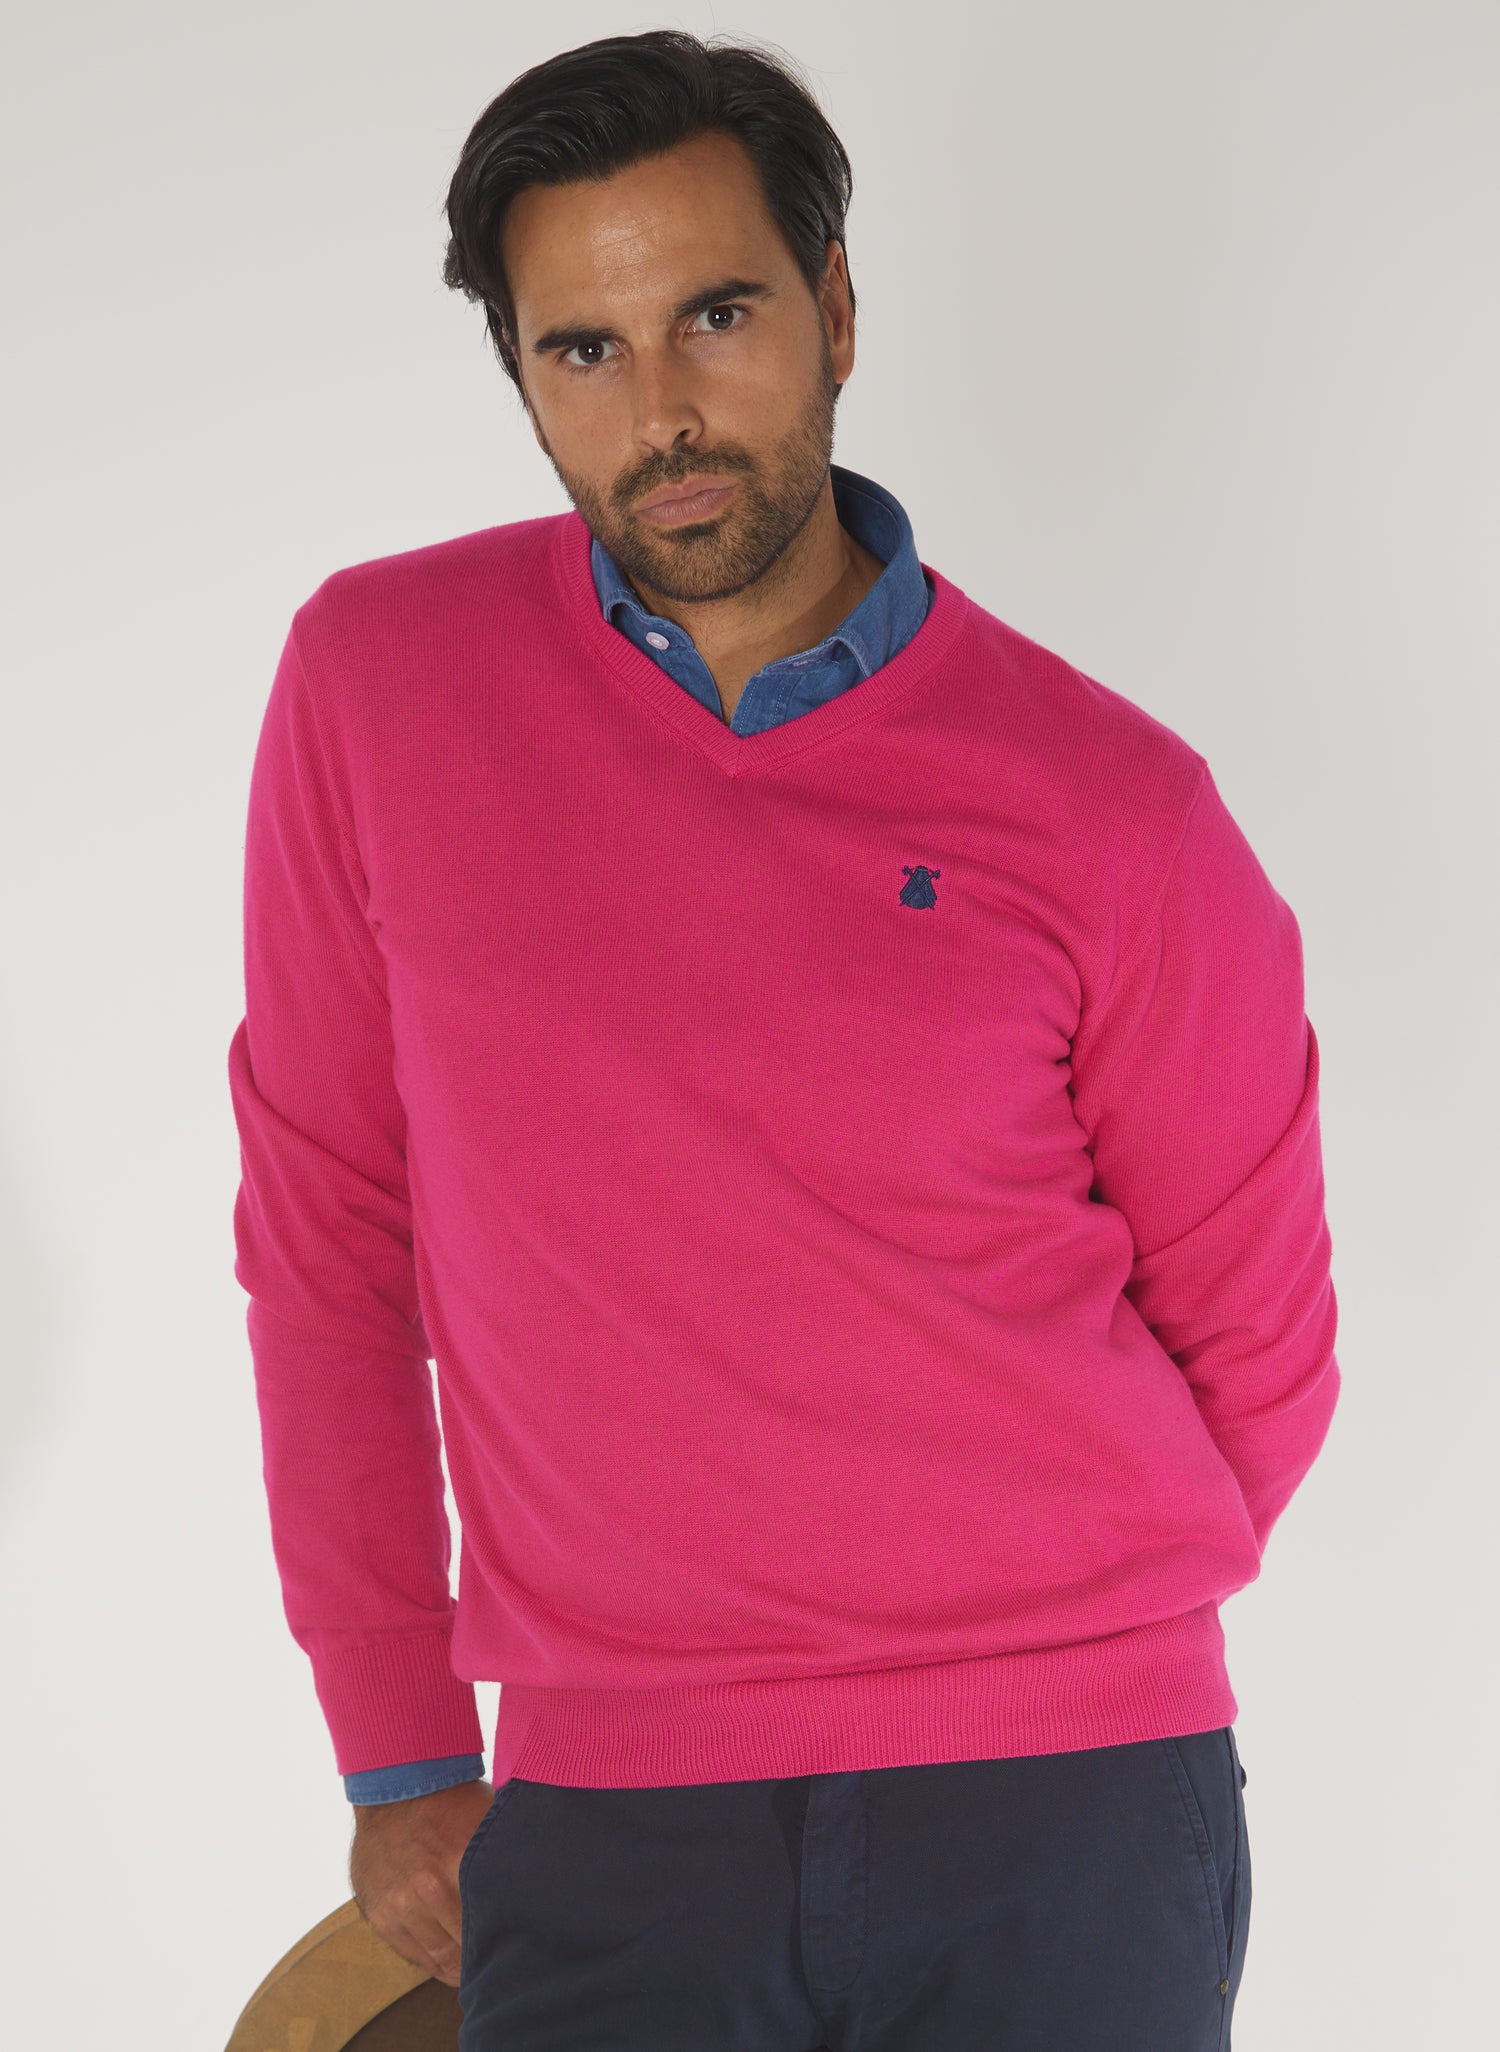 Men's Pink Capote V-Neck Sweater